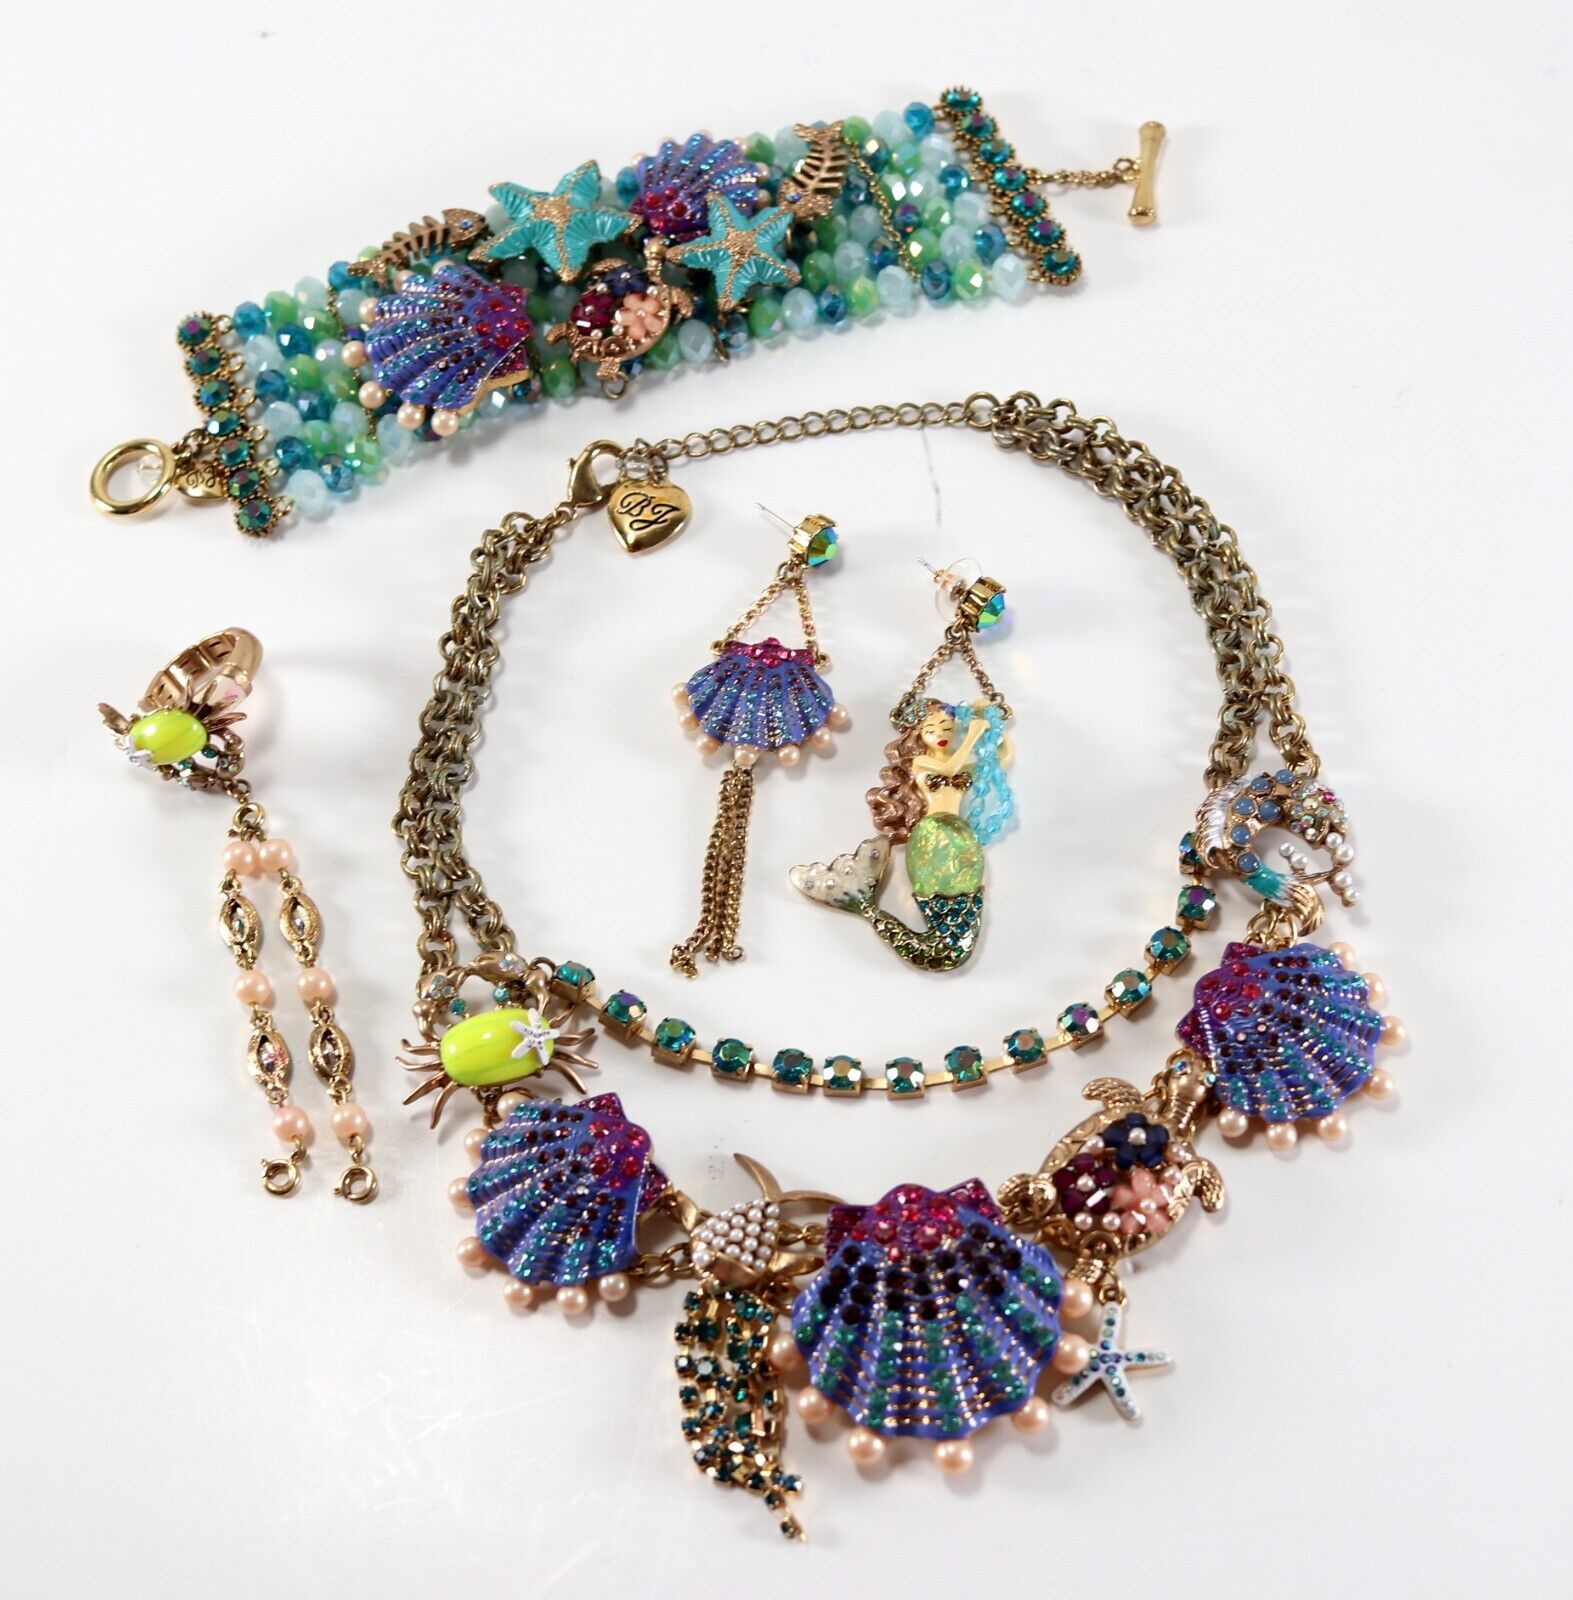 Vintage Betsey Johnson Mermaid Costume Statement Necklace 5 Piece Jewelry Set - $449.98